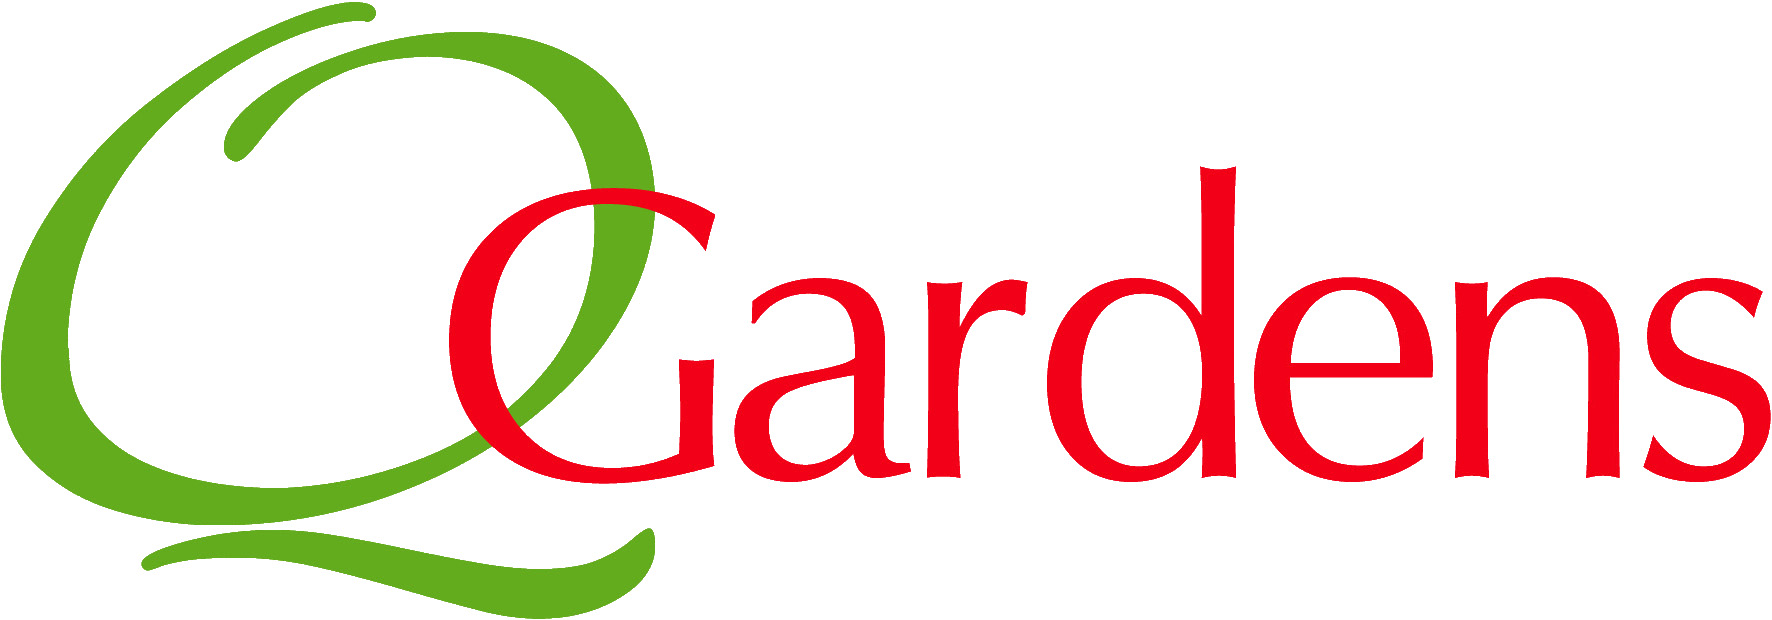 Q Gardens Farm Shop logo